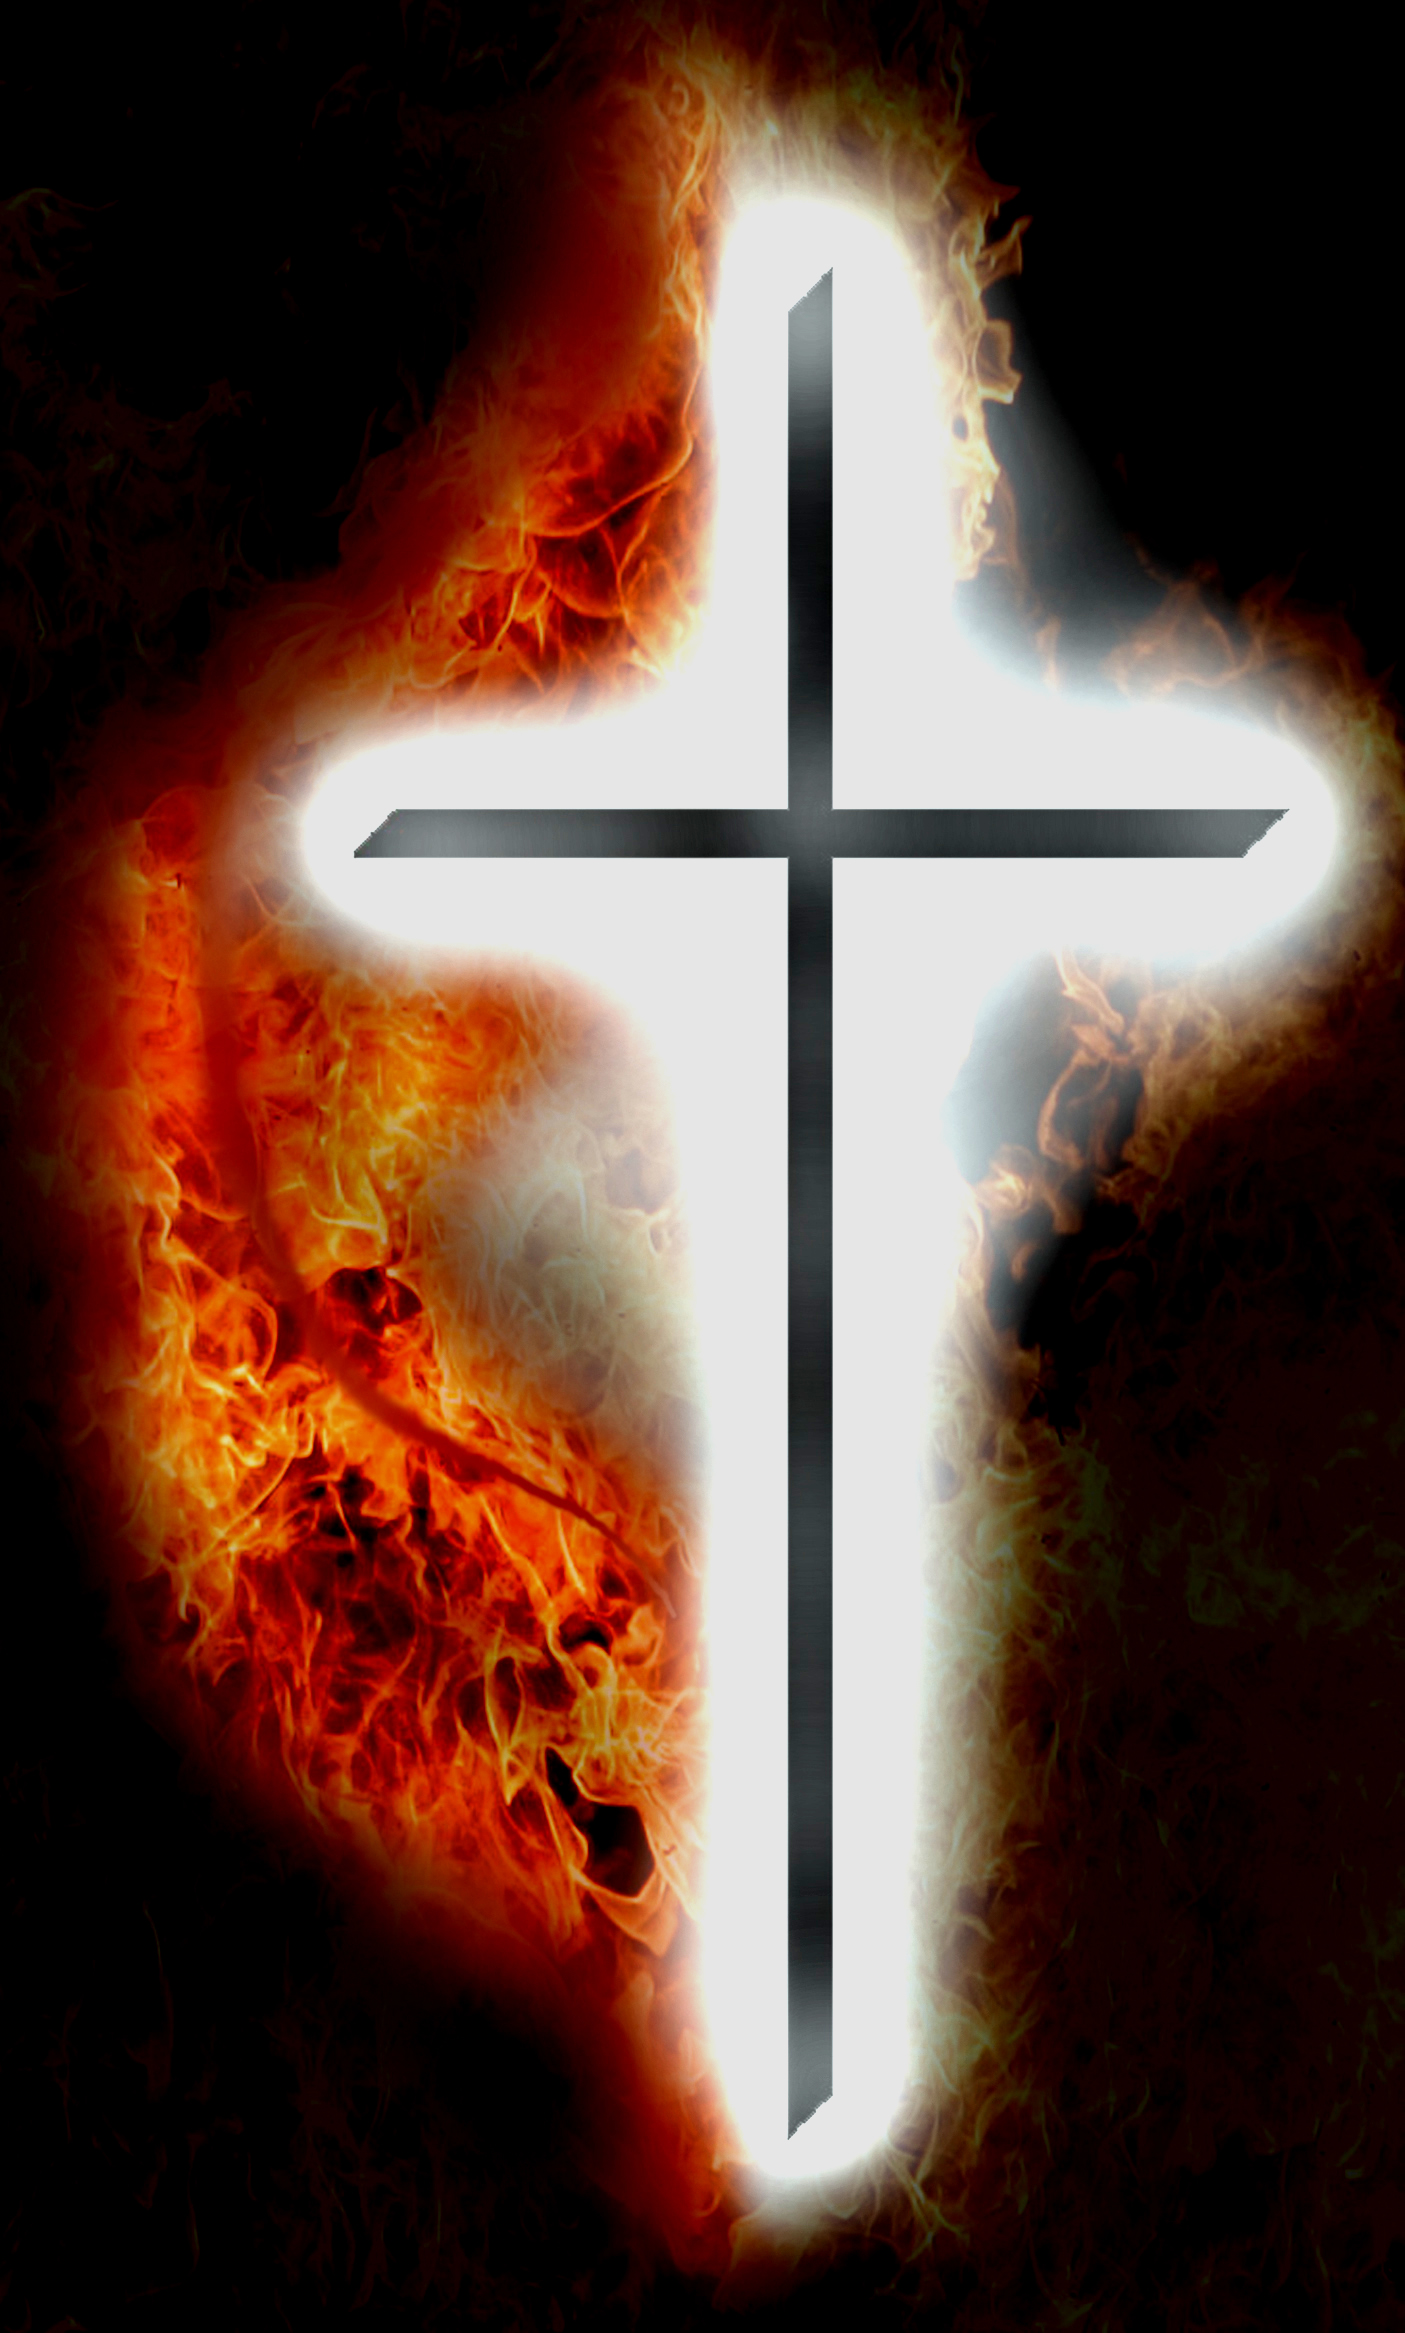 Methodist Cross and Flames